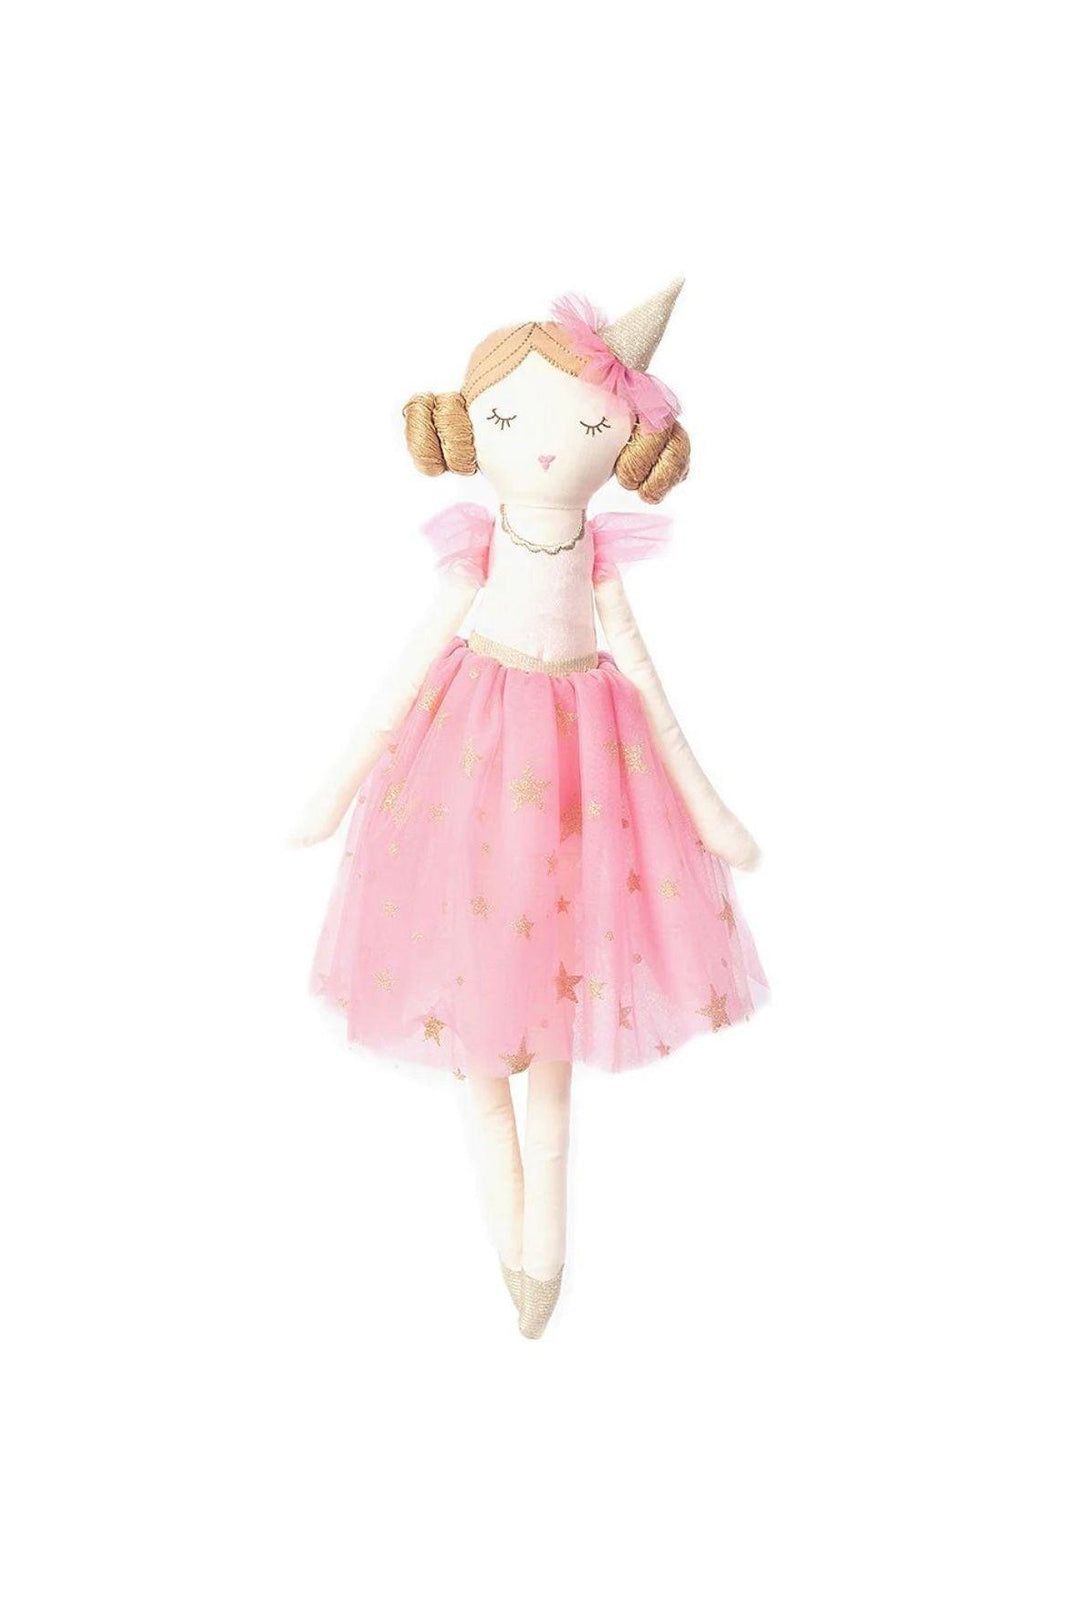 20-inch-bridget-the-birthday-princess-doll-your-bestie-for-celebrations-sophia-rose-children-s-boutique-1 - Sophia Rose Children's Boutique